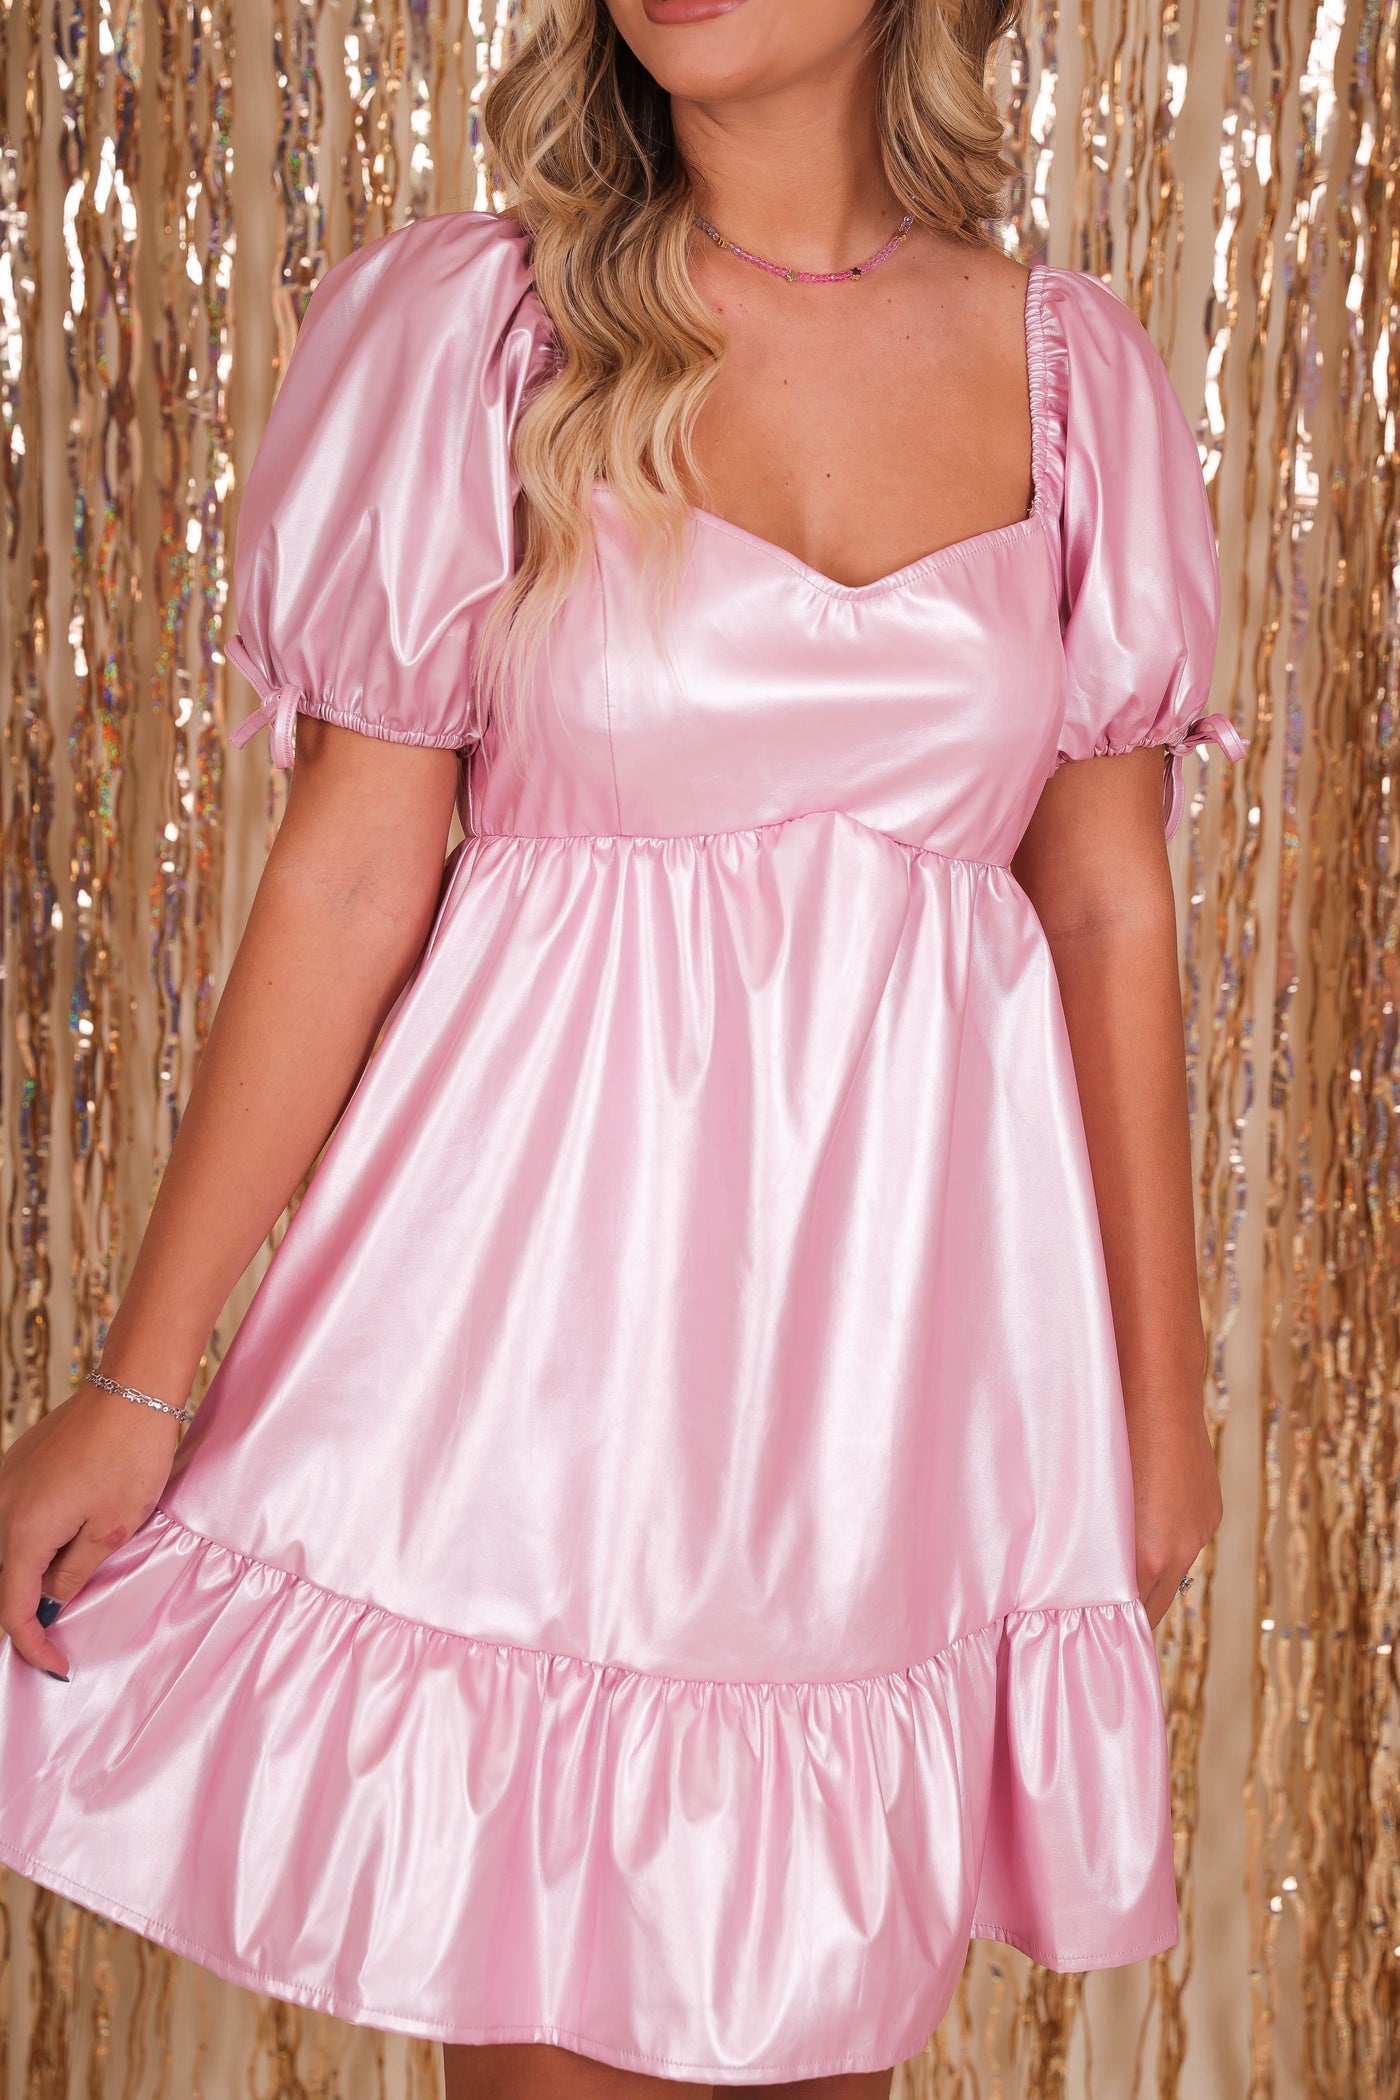 Women's Pink Metallic Dress- Shimmery Pink Party Dress